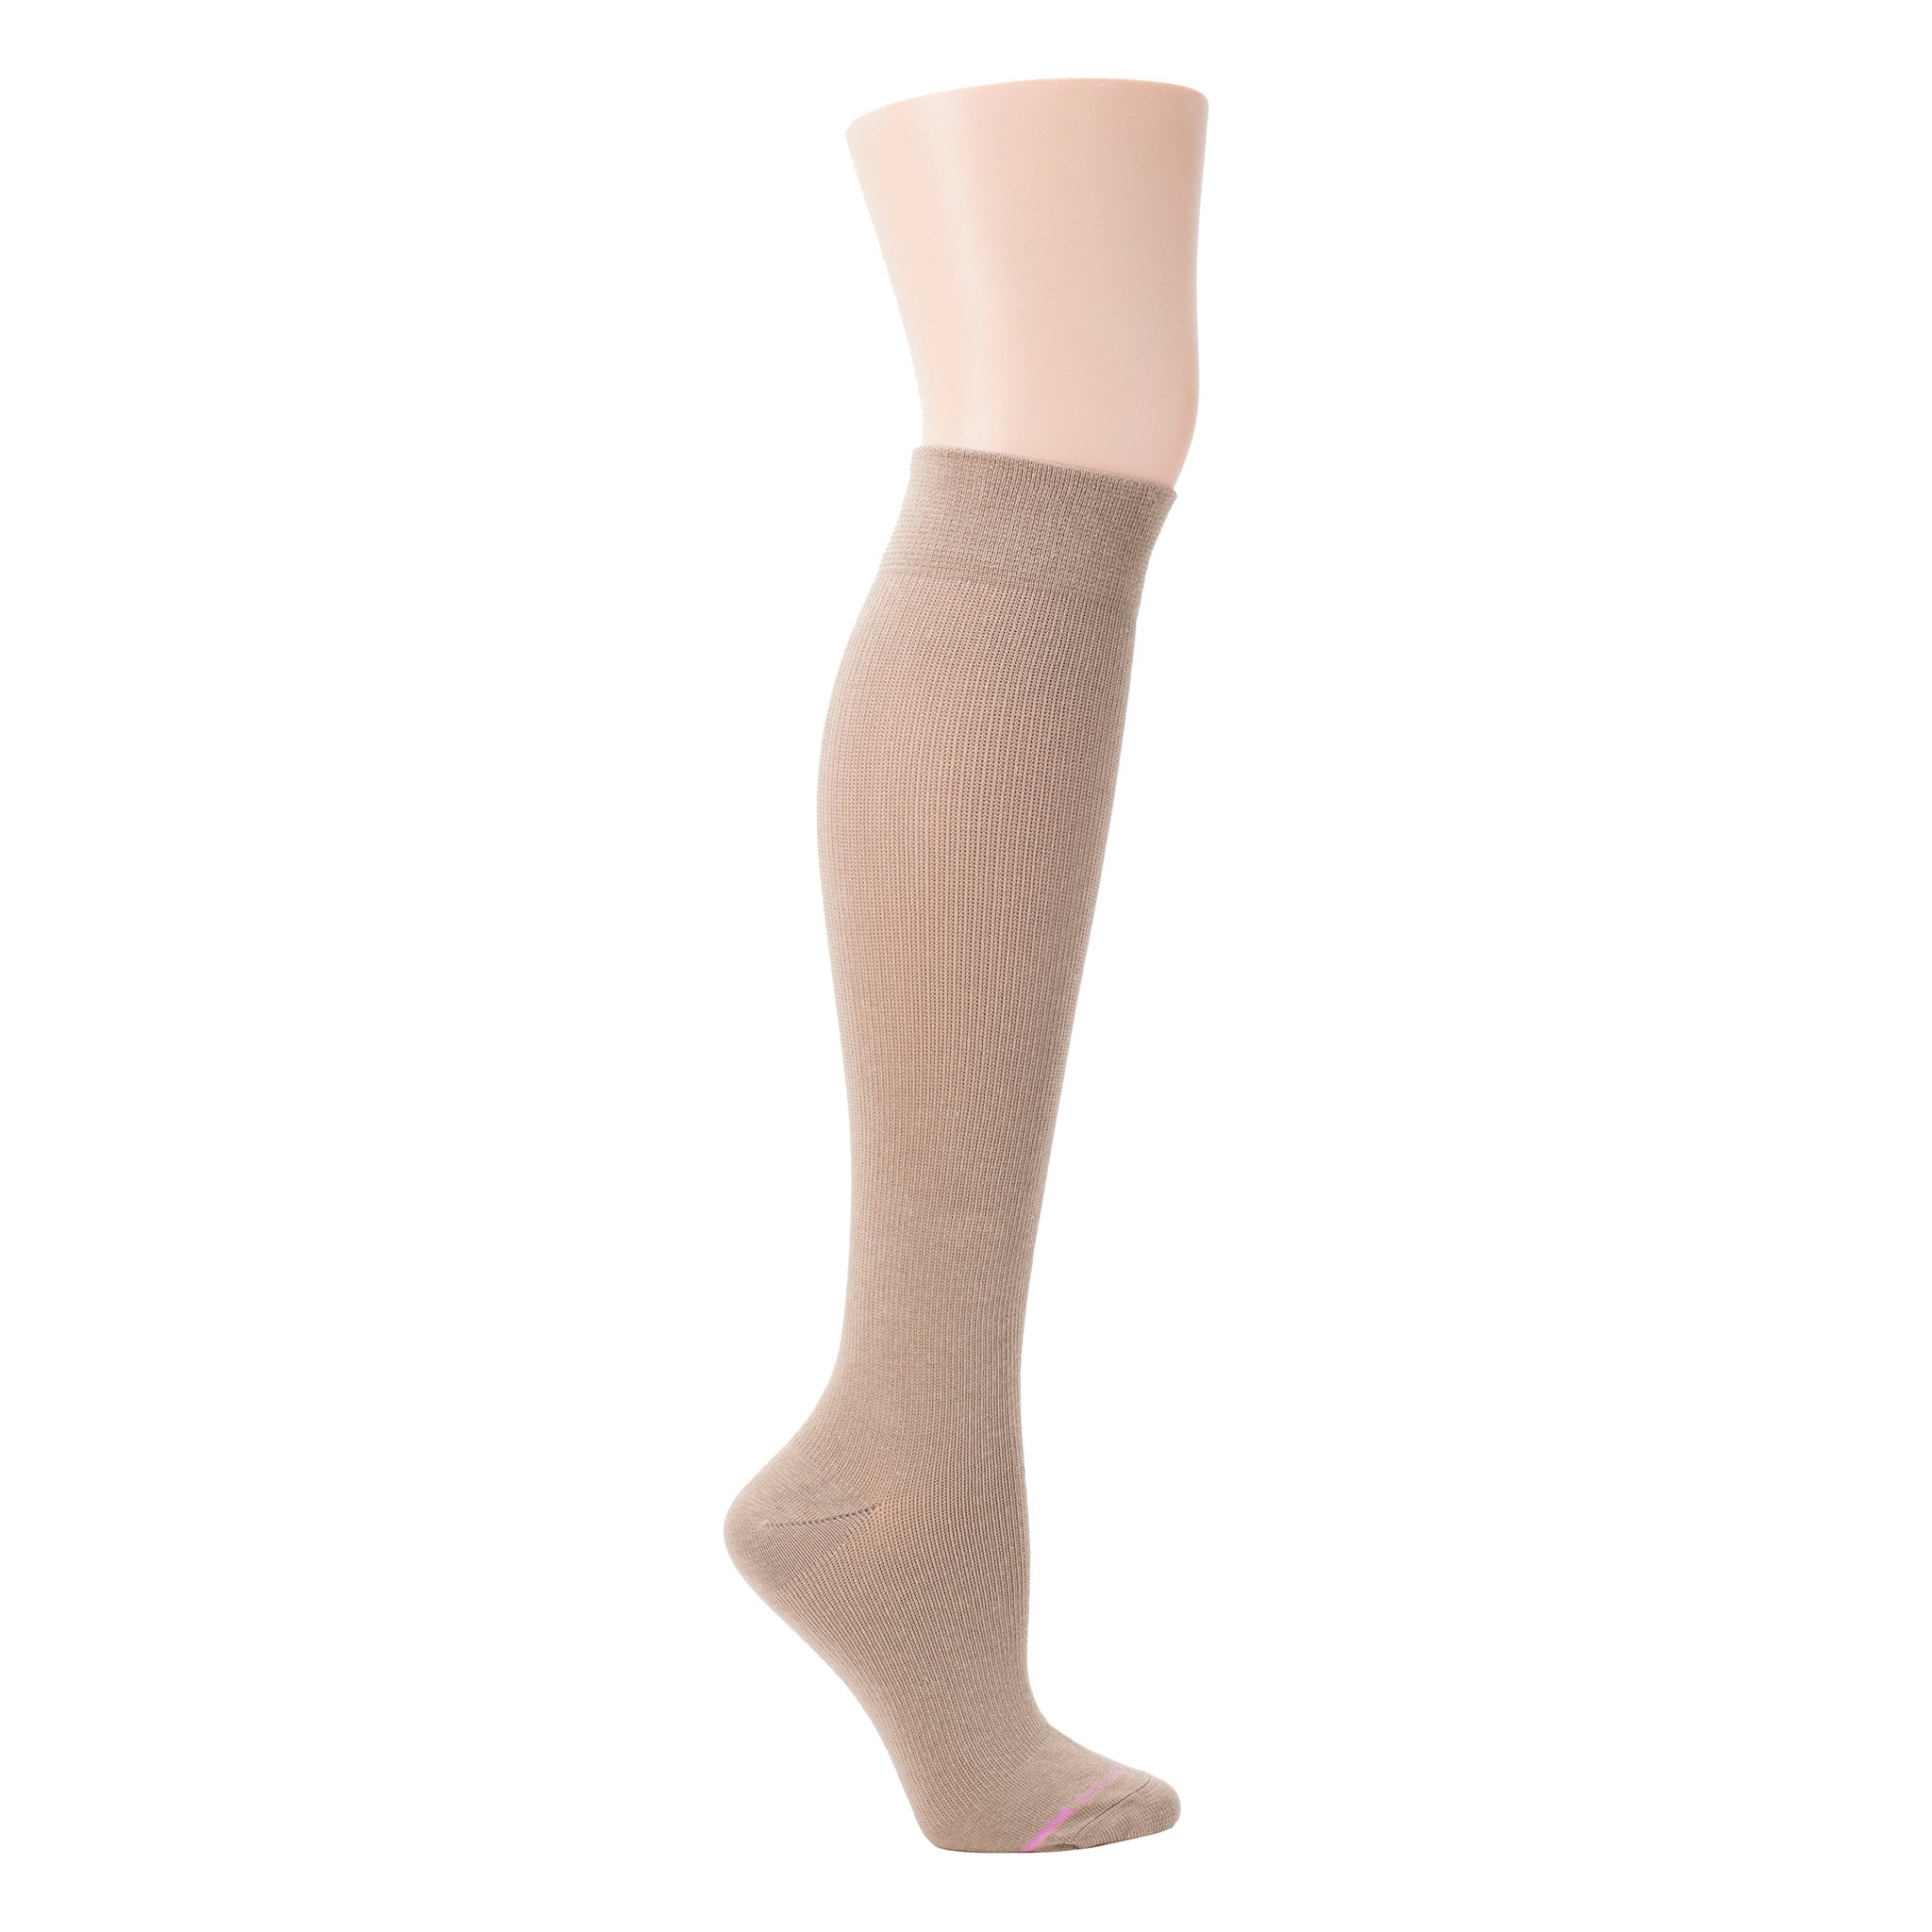 Solid Cotton Blend | Knee-High Compression Socks For Women